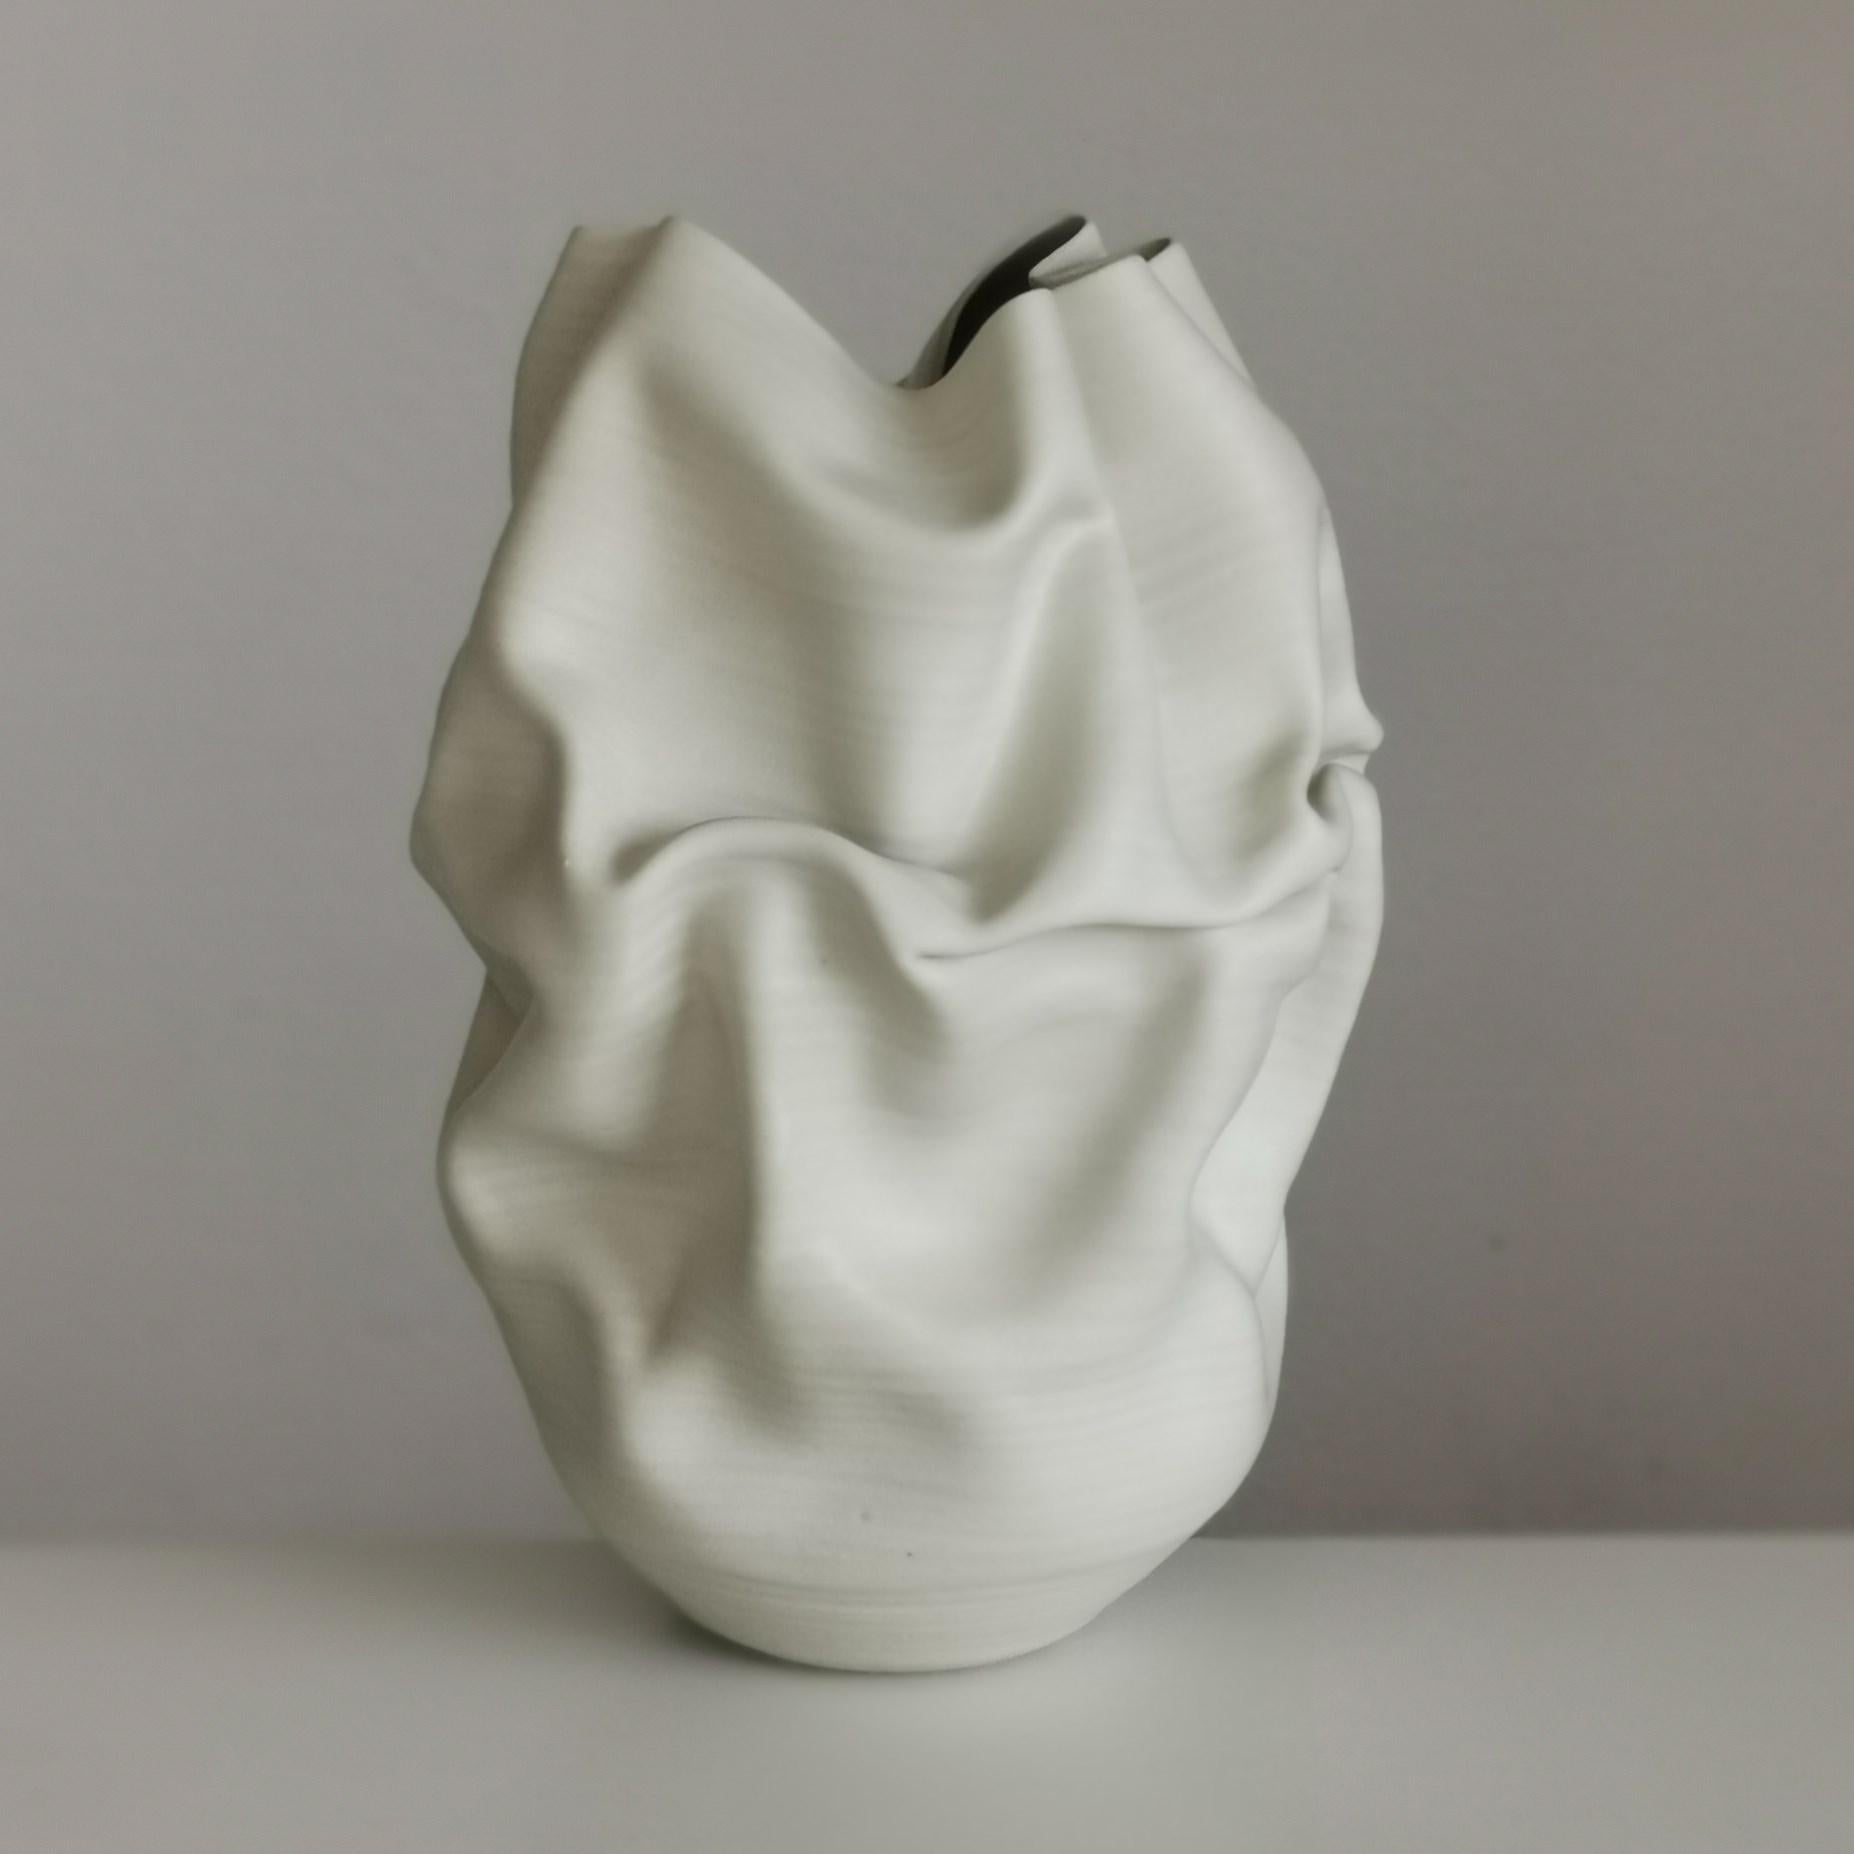 Undulating Crumpled Form No 51, a Ceramic Vessel by Nicholas Arroyave-Portela 2